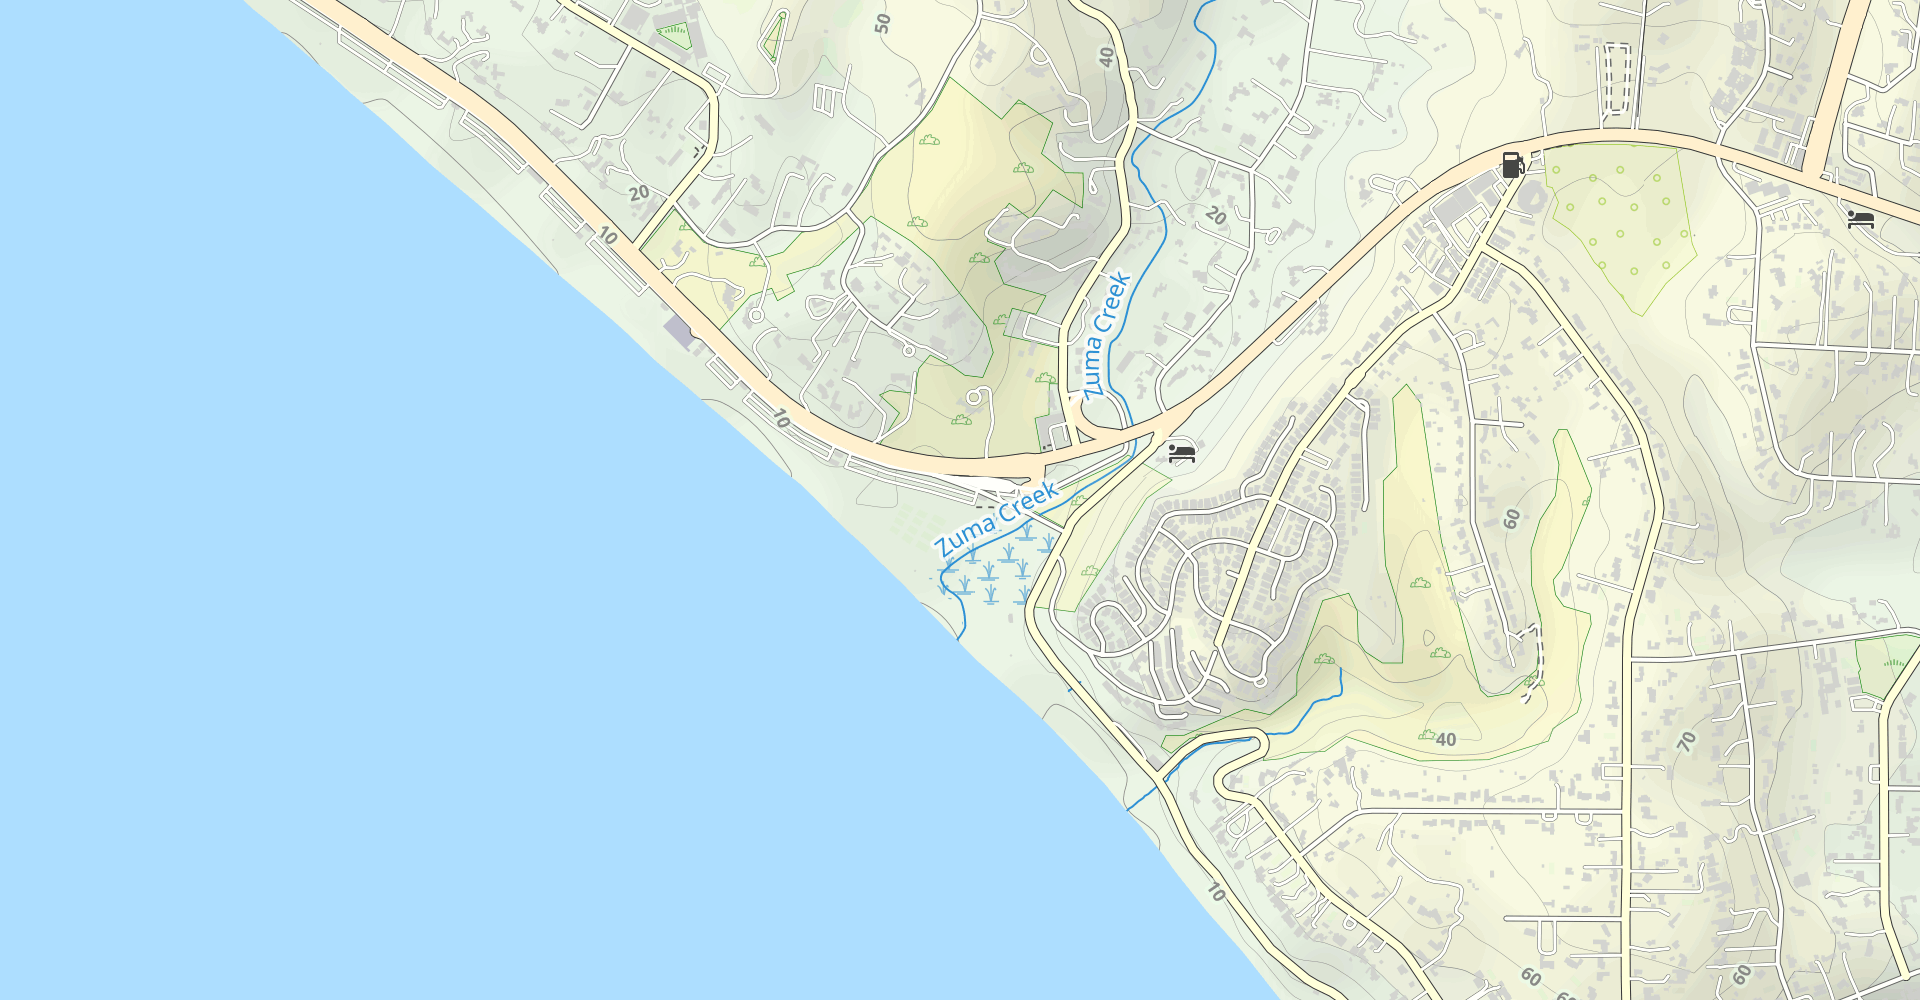 Zuma Beach Walk, California - 150 Reviews, Map